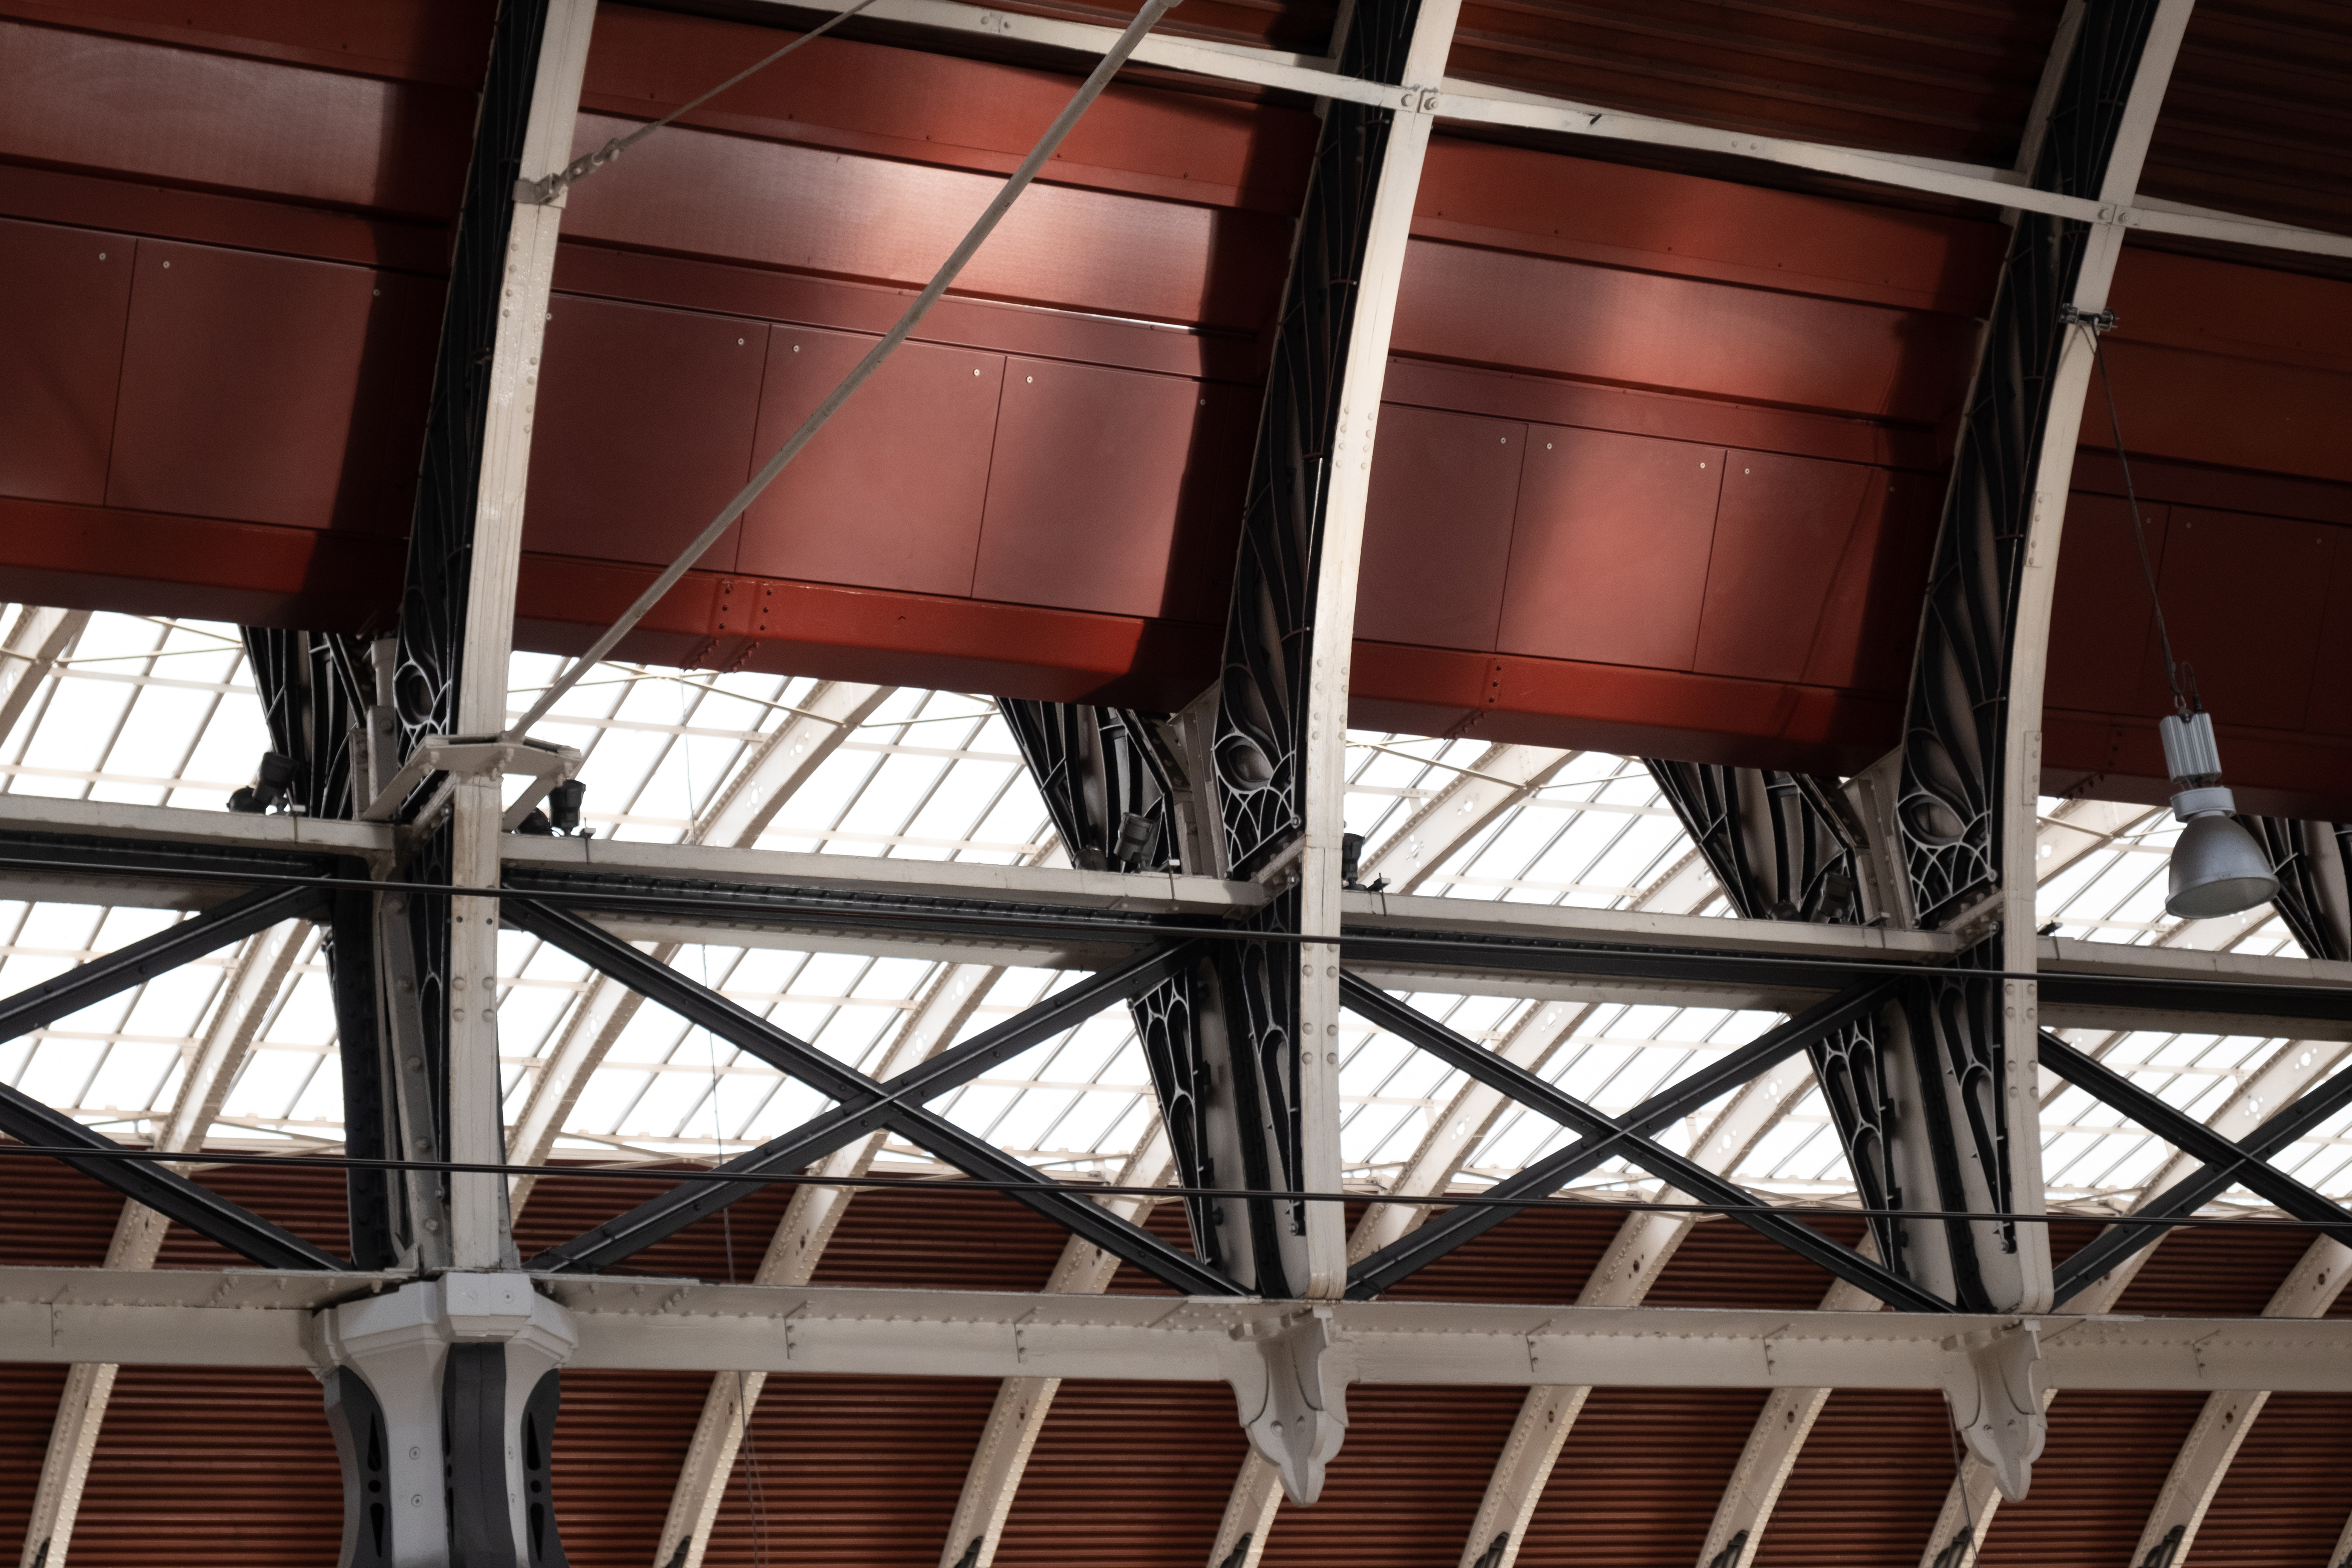 The roof at Paddington Station